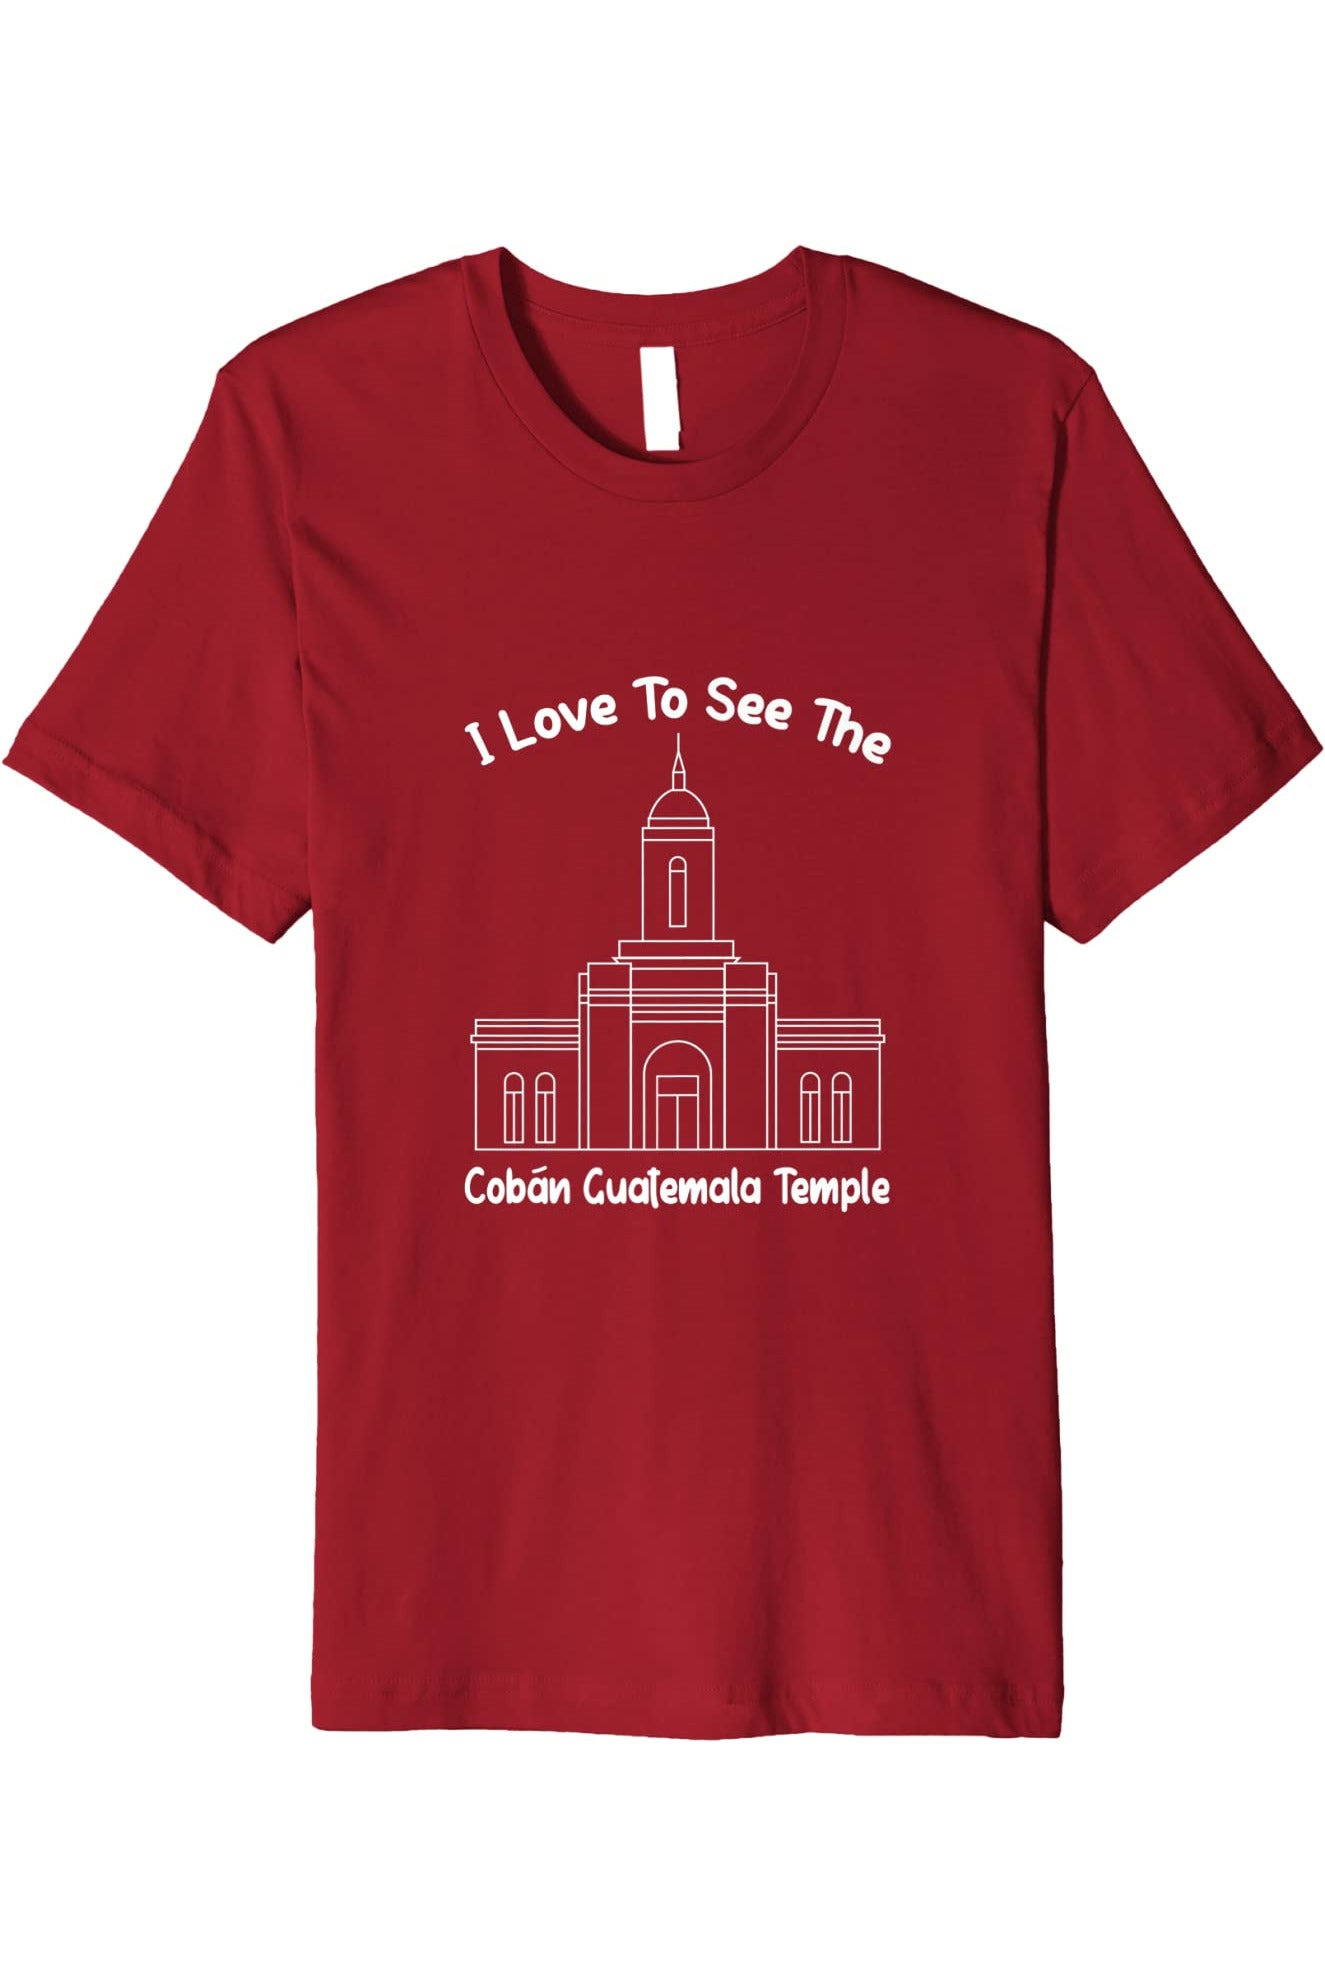 Coban Guatemala Temple T-Shirt - Premium - Primary Style (English) US